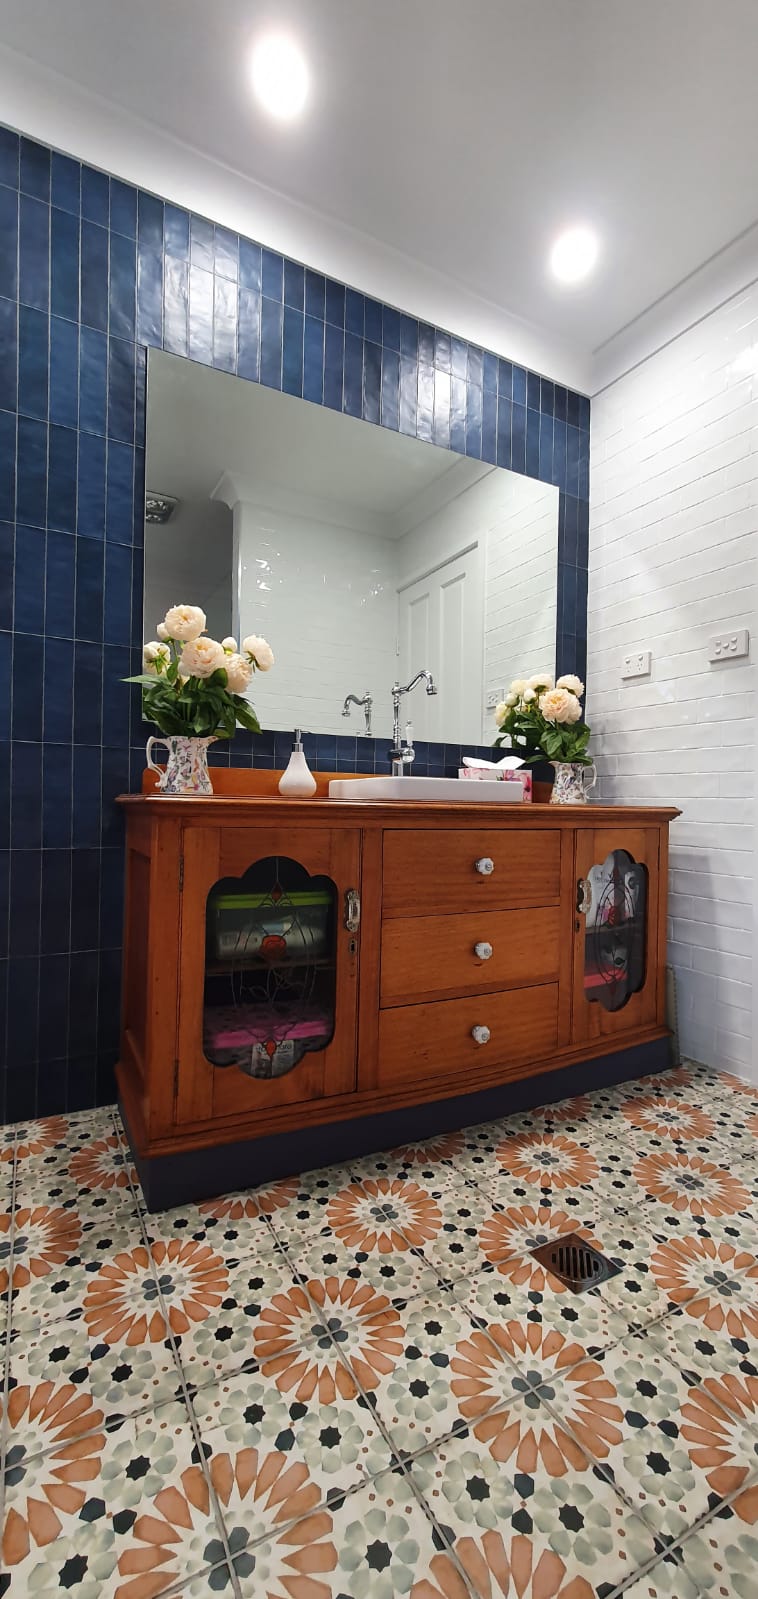 Summit Bathrooms - The bathroom renovation specialists Kurri Kurri (02) 4937 2360